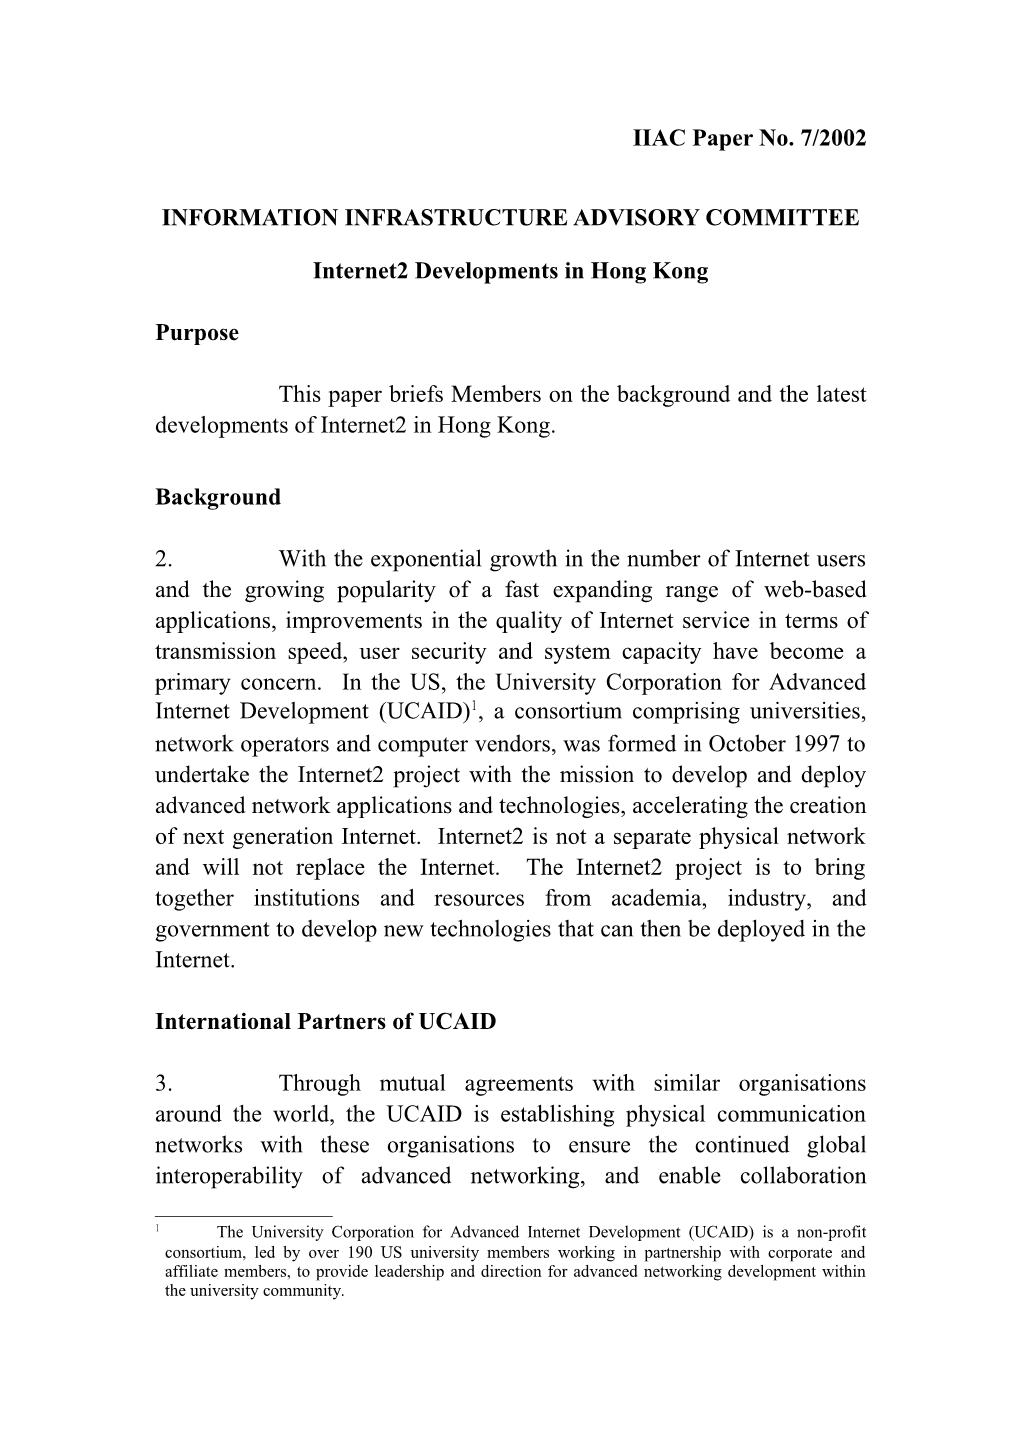 Internet2 Developments in Hong Kong (IIAC Paper No. 7/2002)